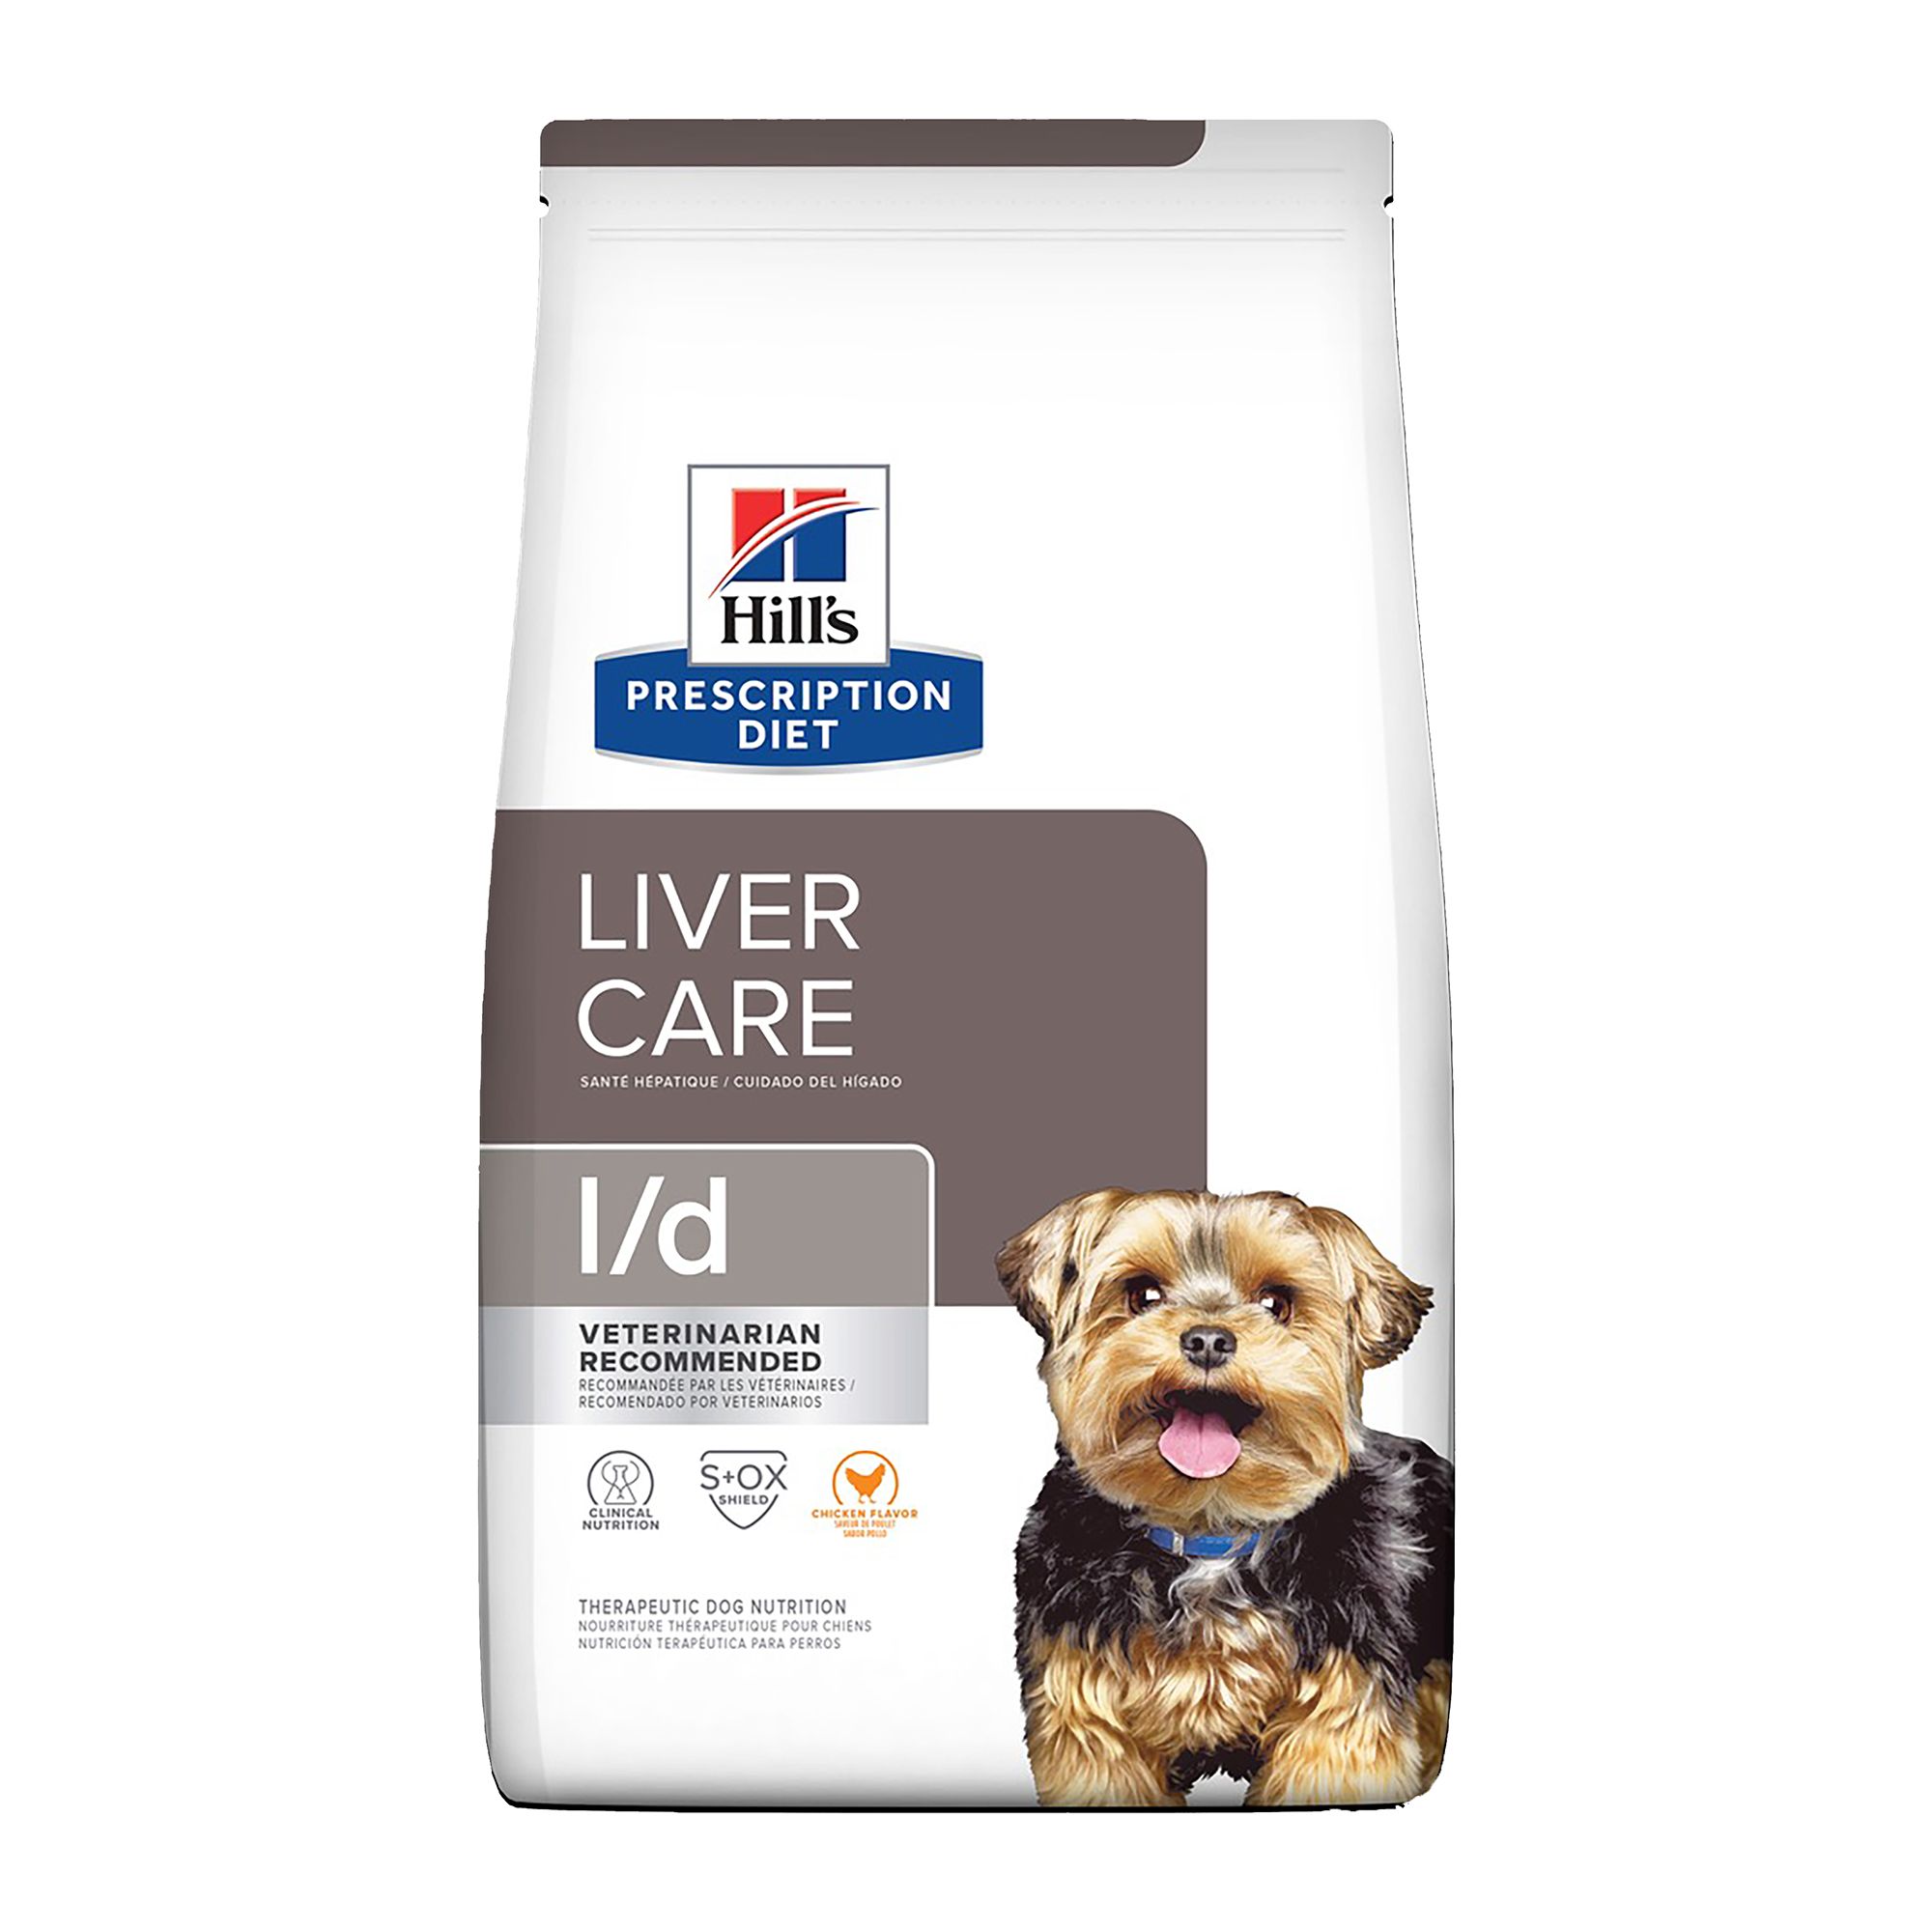 Liver Care Dog Food 